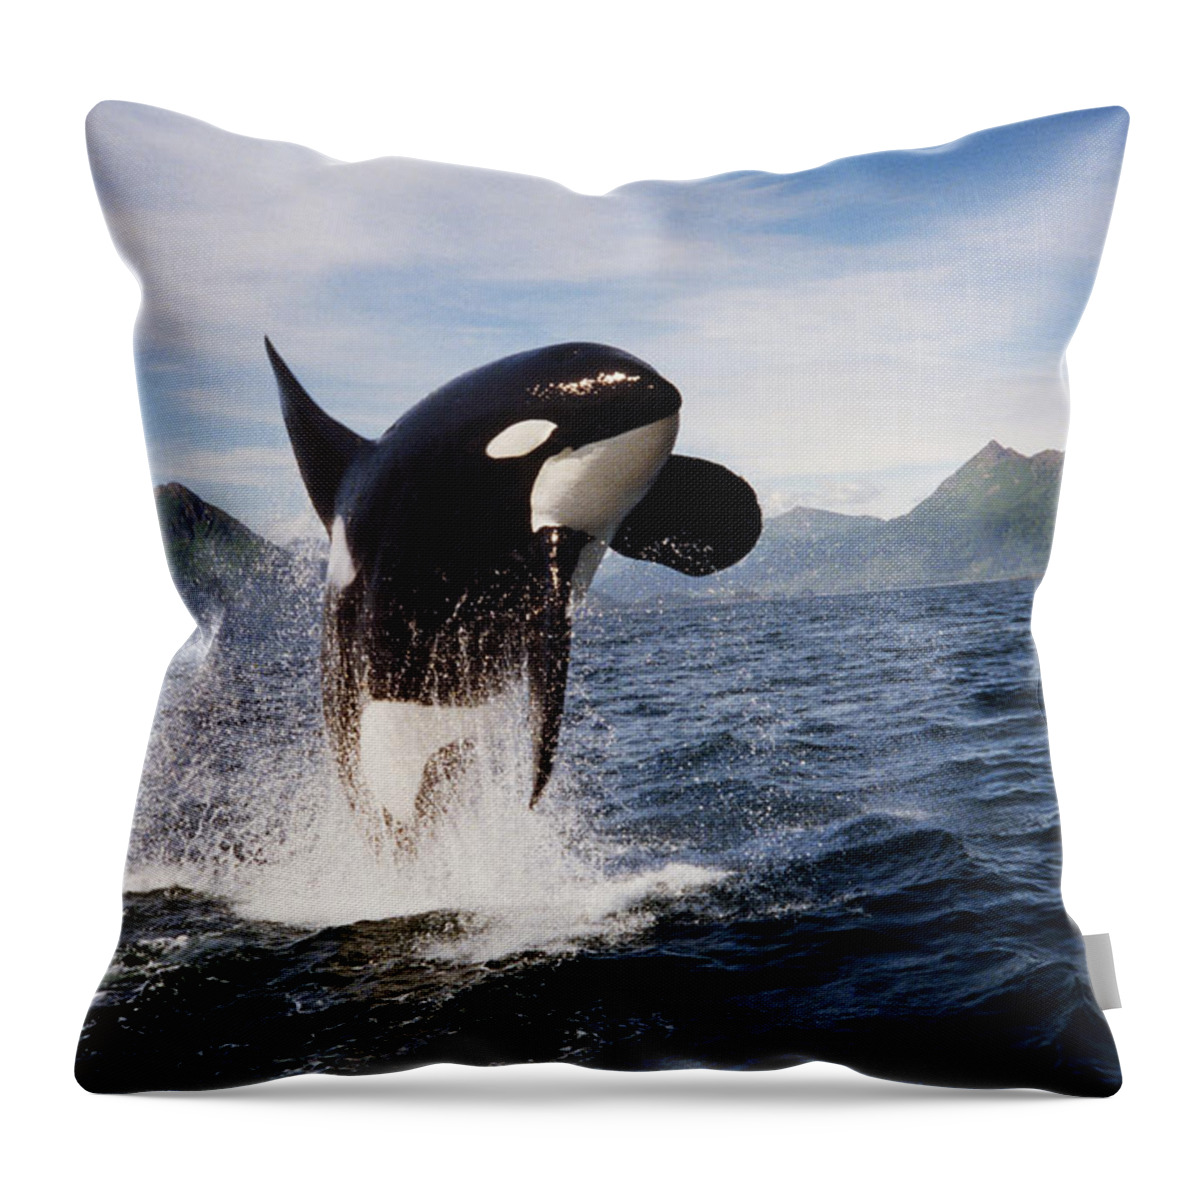 Orca Throw Pillow featuring the photograph Orca breach by Richard Johnson